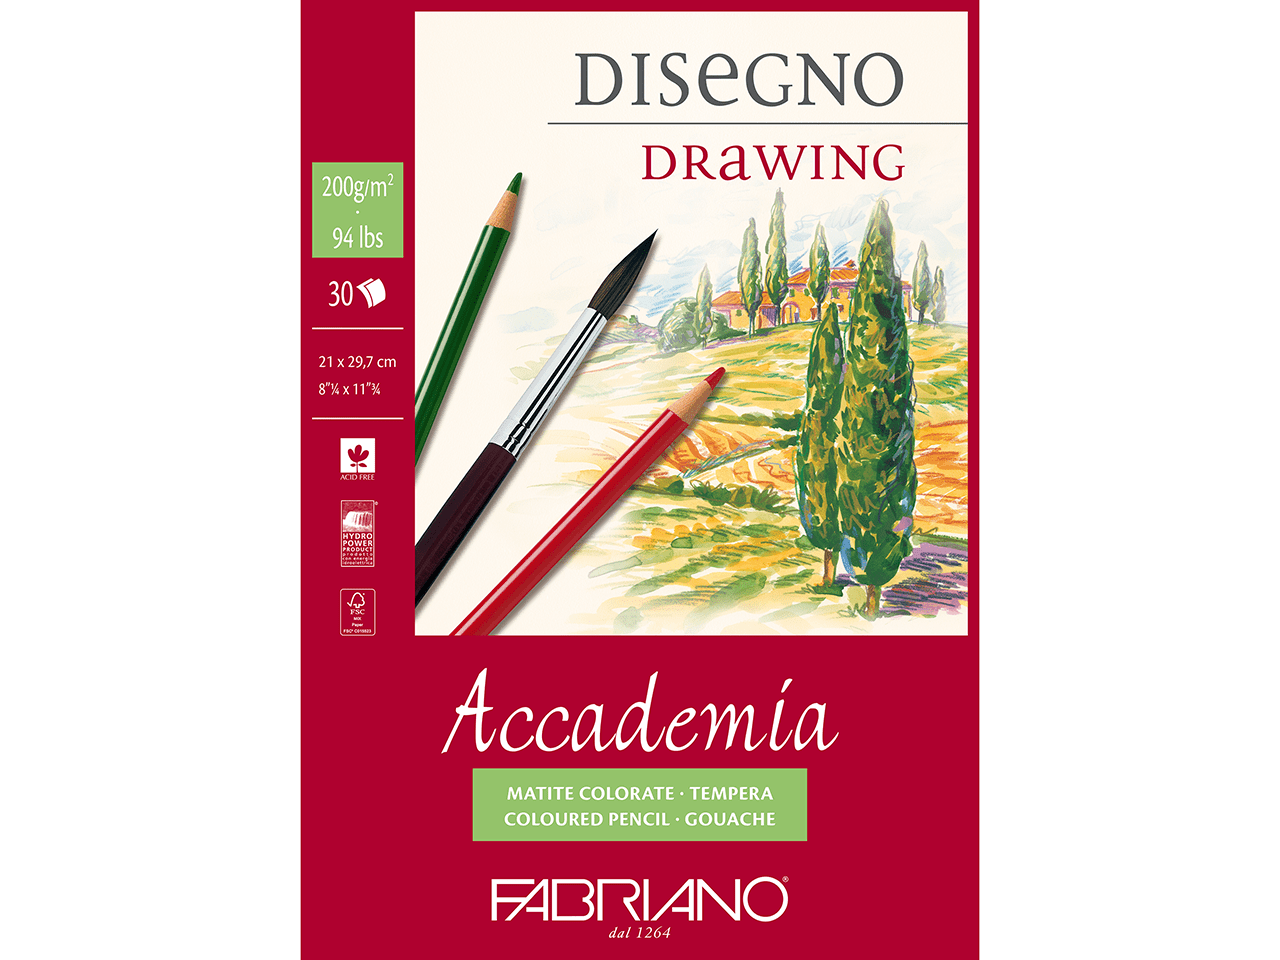 Accademia, paper, gouache, pencil, charcoal, pastels, sketches